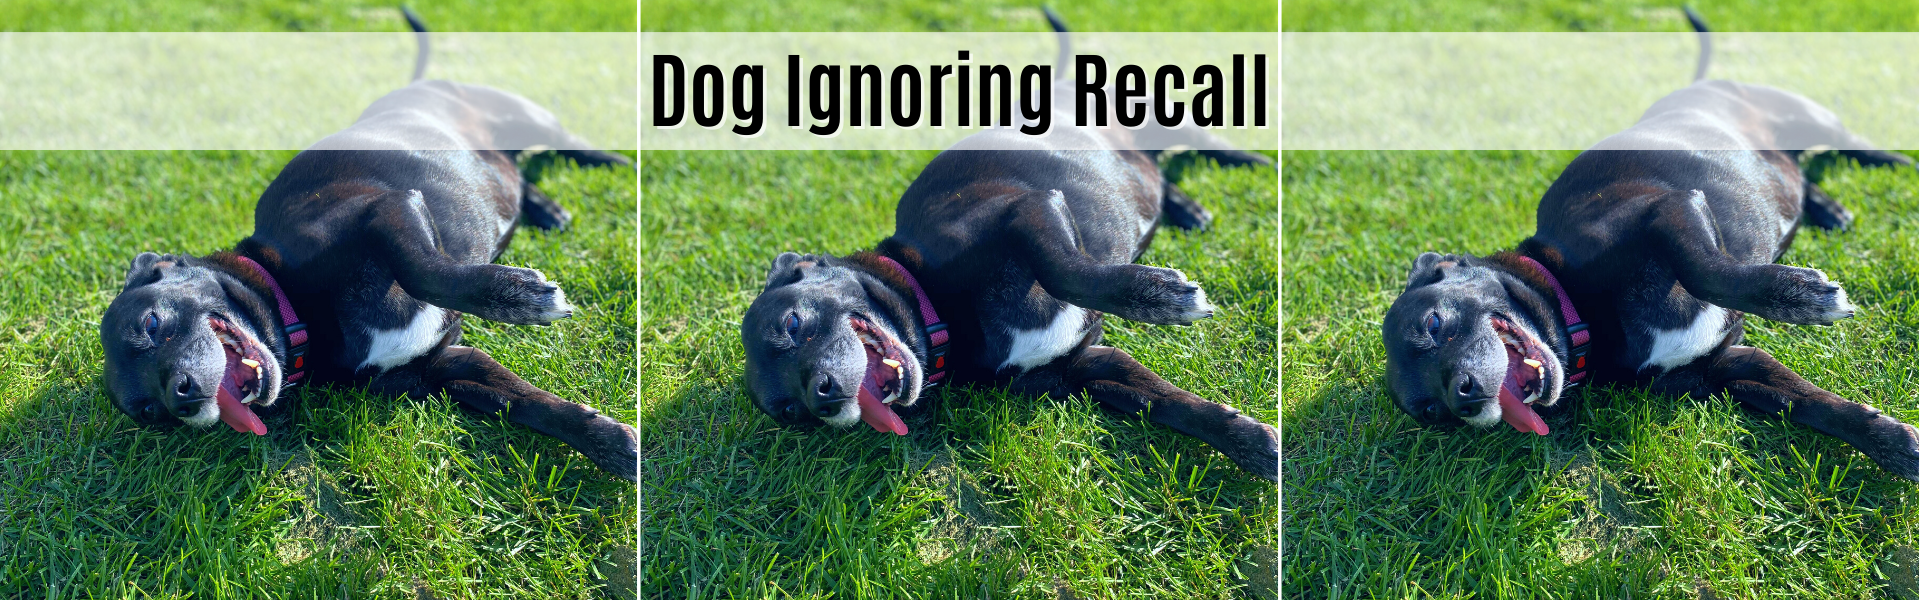 dog ignoring recall